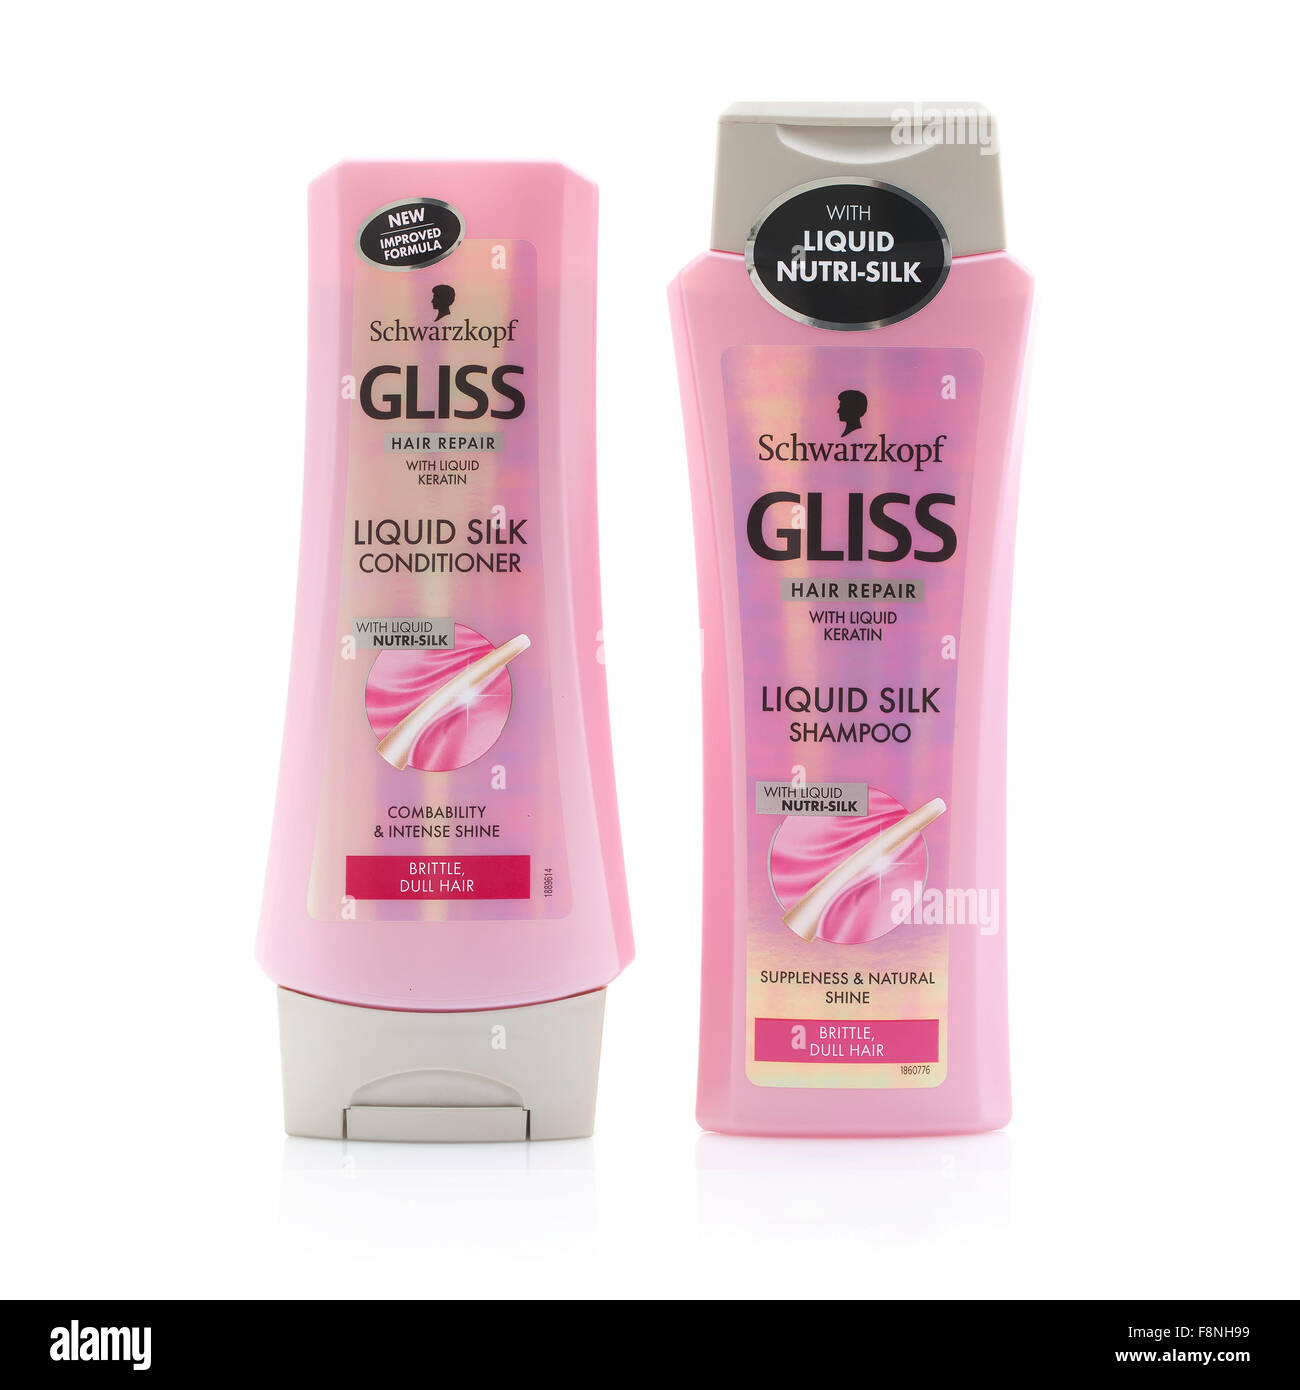 Schwarzkopf Gliss Liquid Silk Shampoo and Conditioner on a White Background Stock Photo